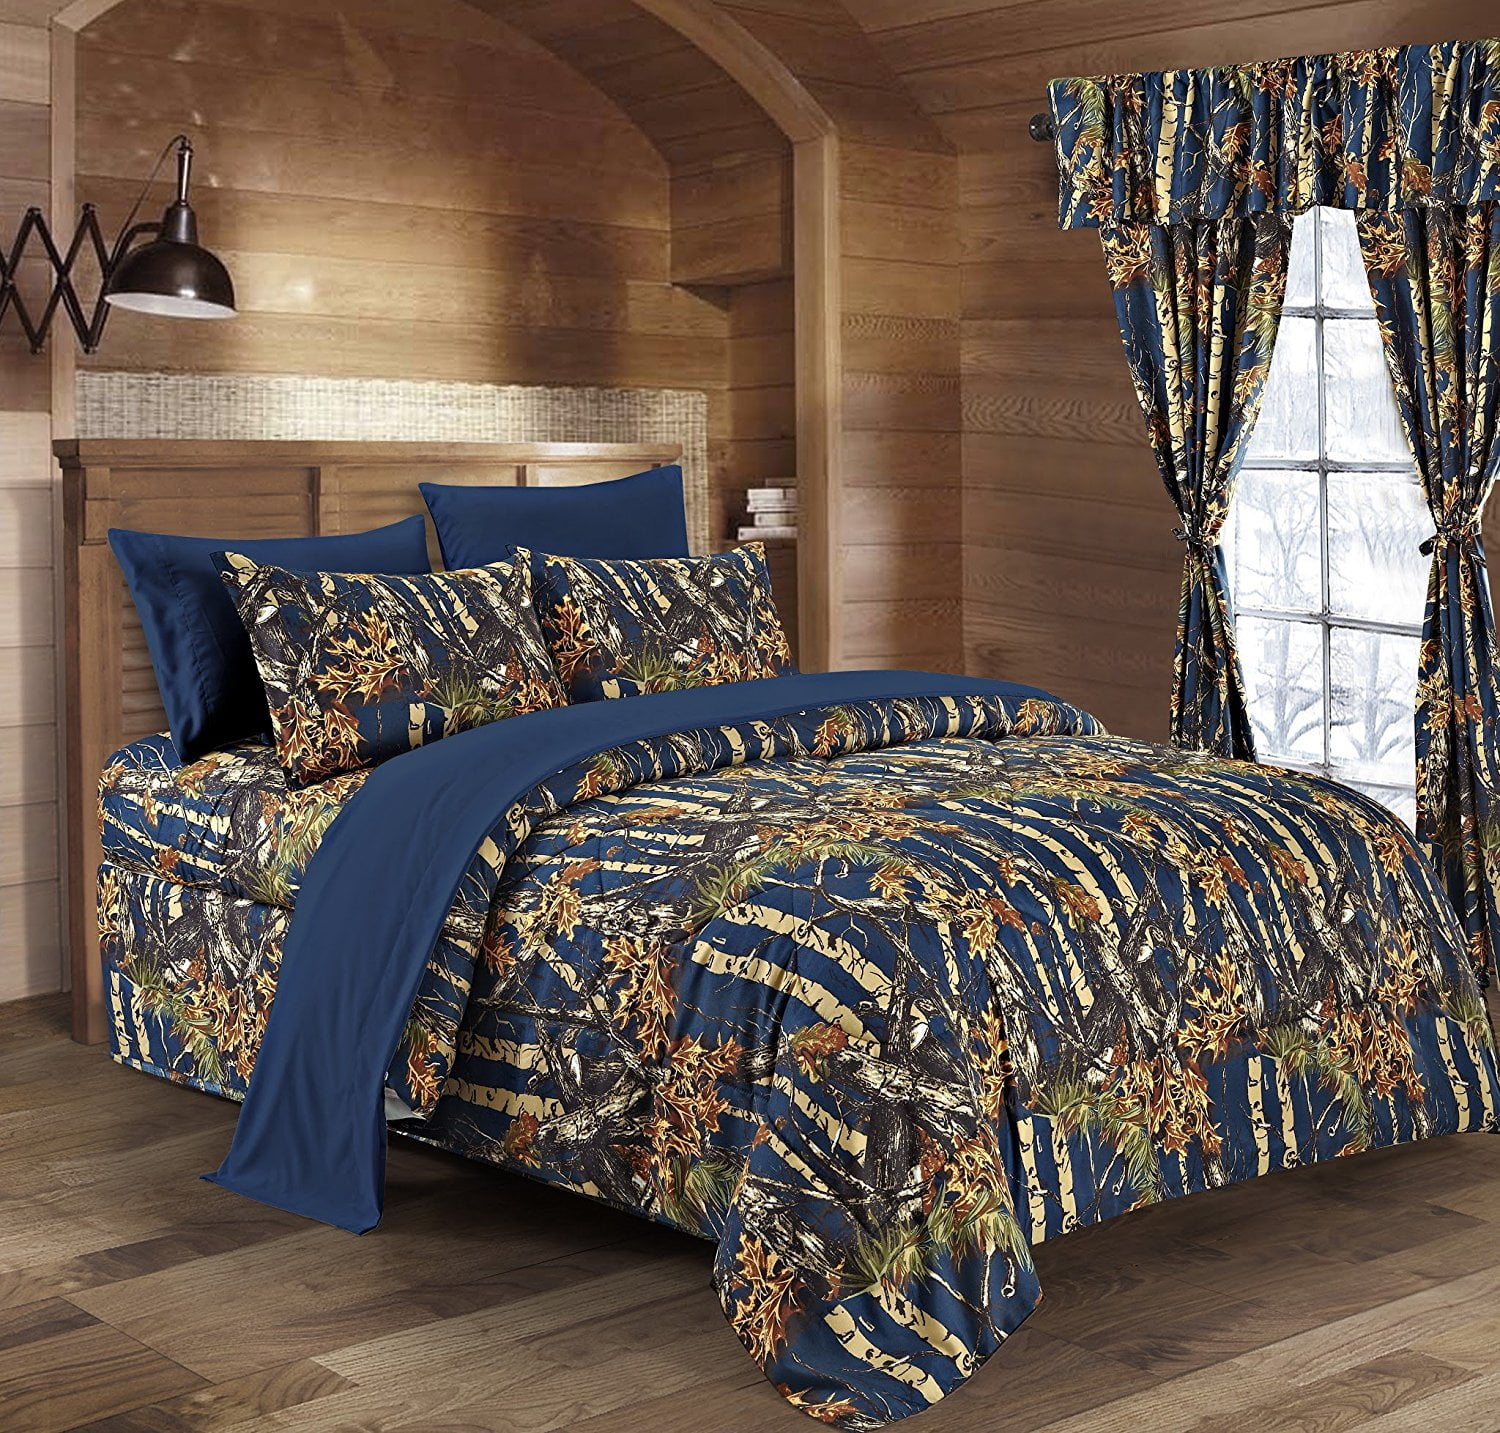 12 pc set Biohazard Woods Camo Queen size comforter sheets pillowcases curtains 